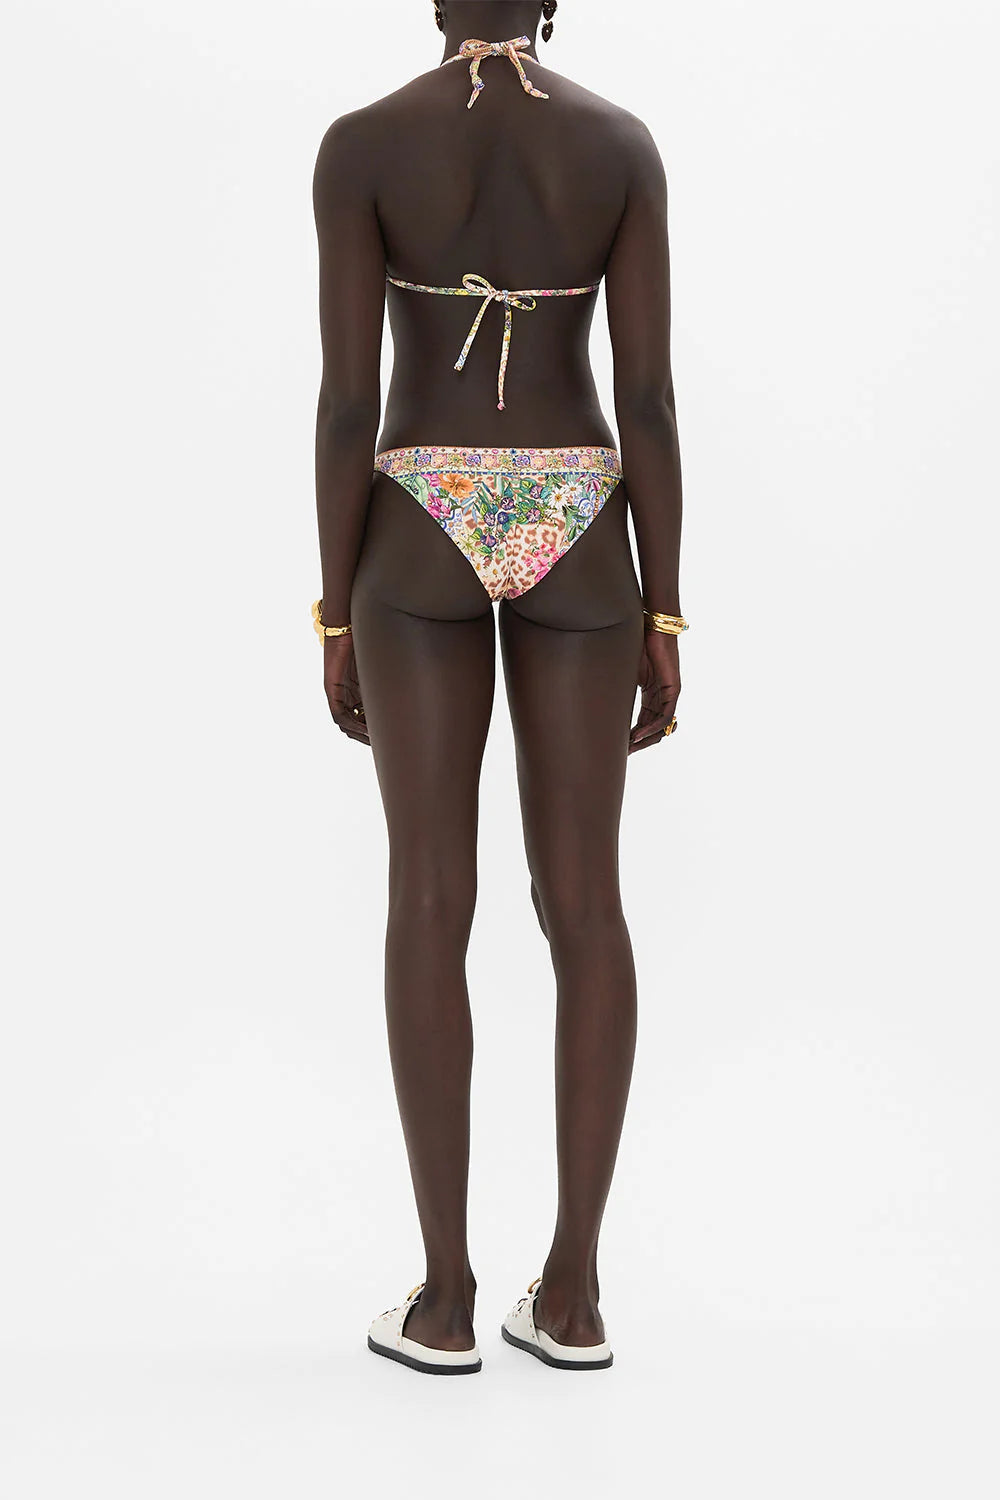 Camilla Ball Bikini Set, Flowers of Neptune I Floral Triangle Bikini